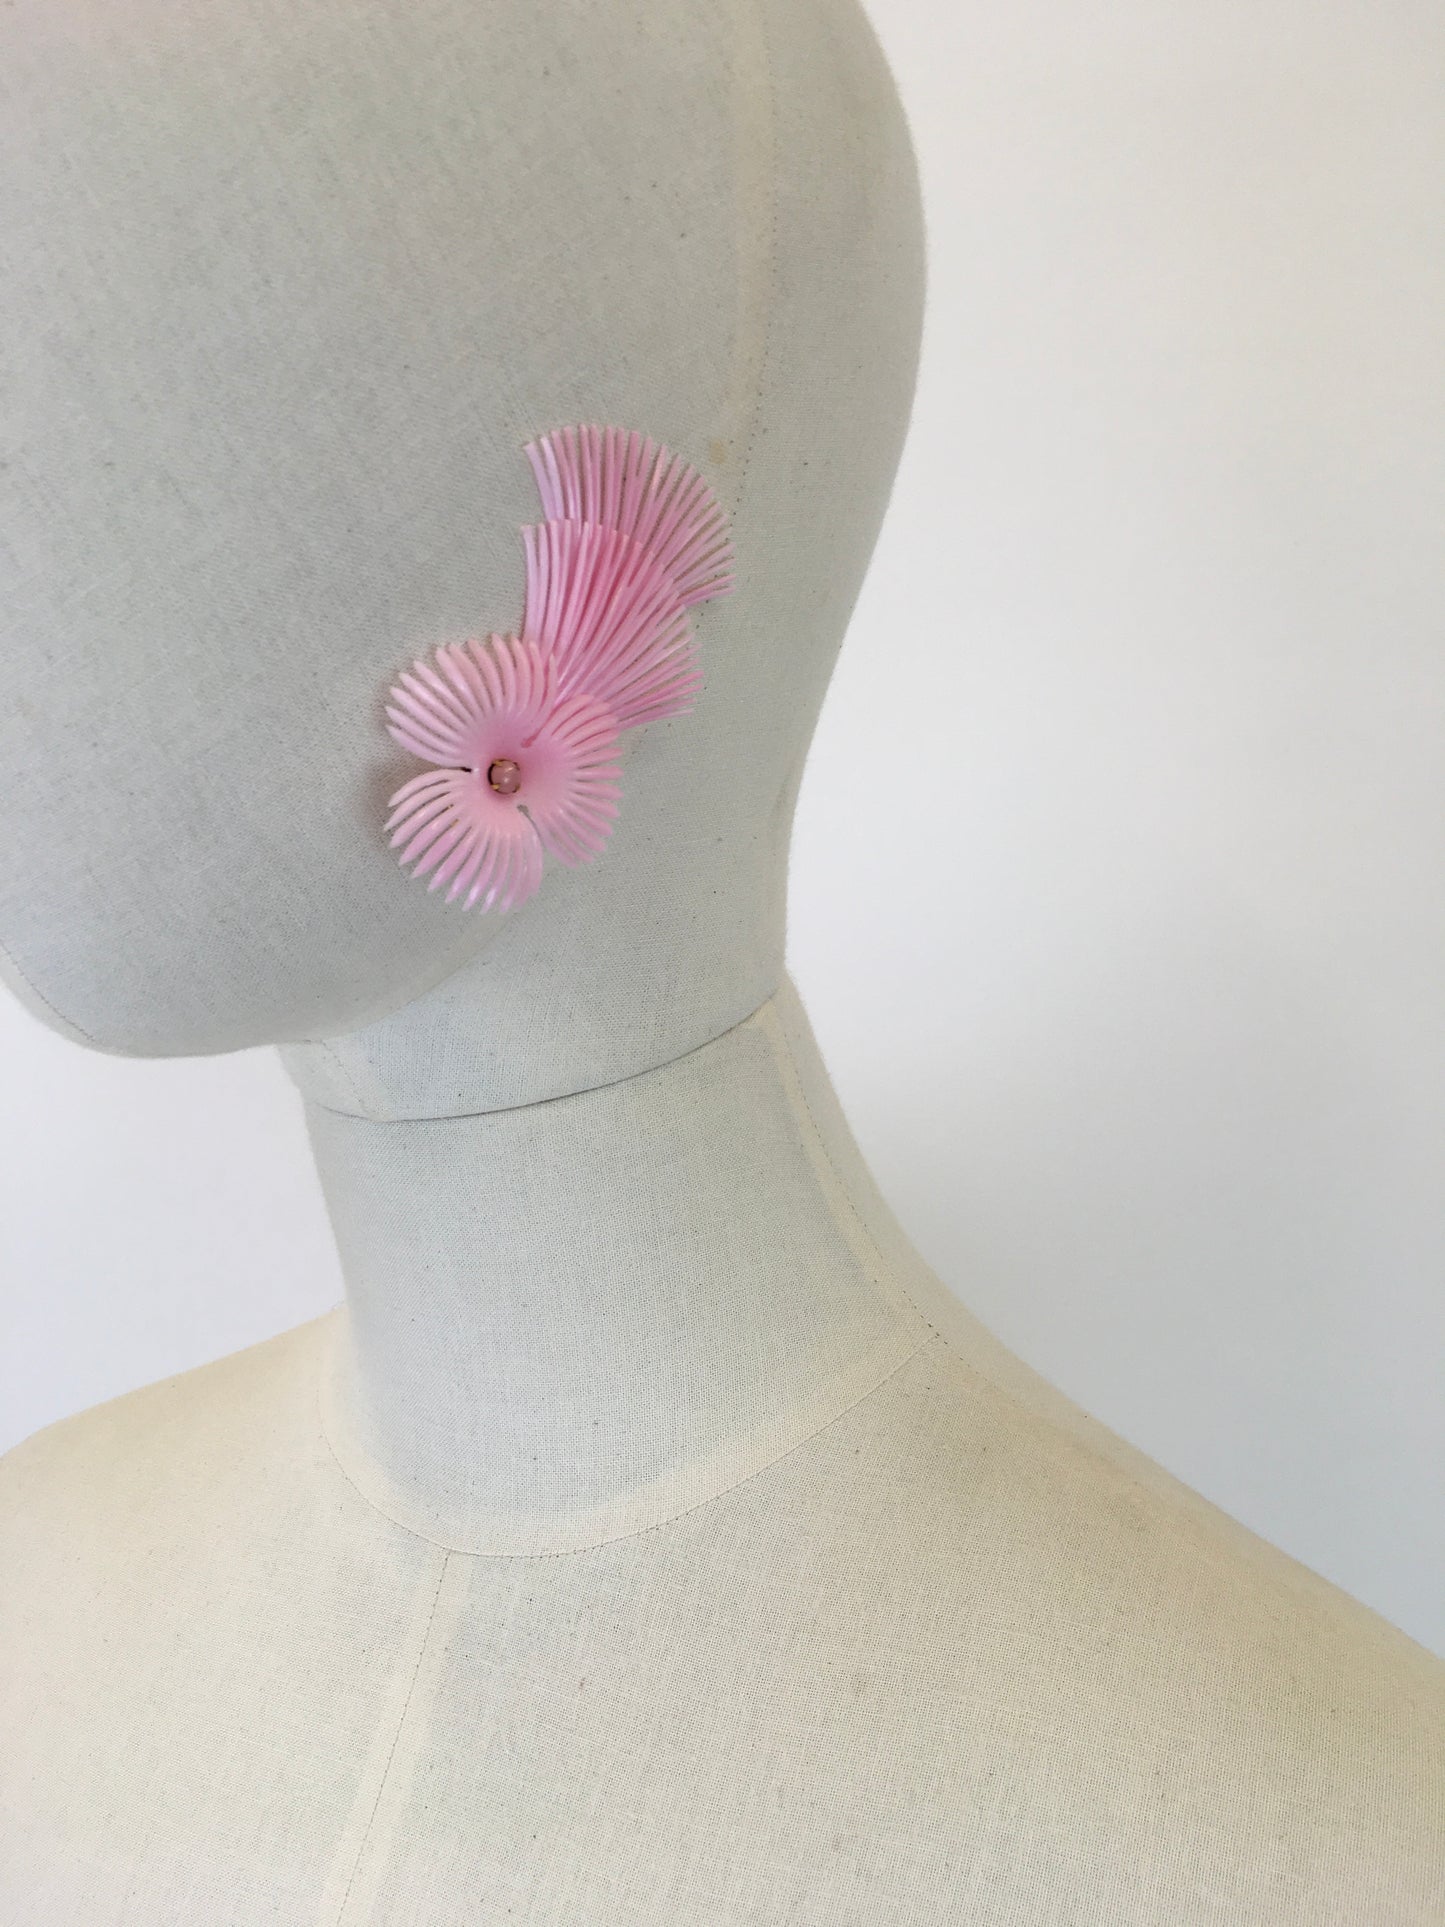 Original 1950’s Plastic Climber Clip on Earrings - In Bubblegum Pink